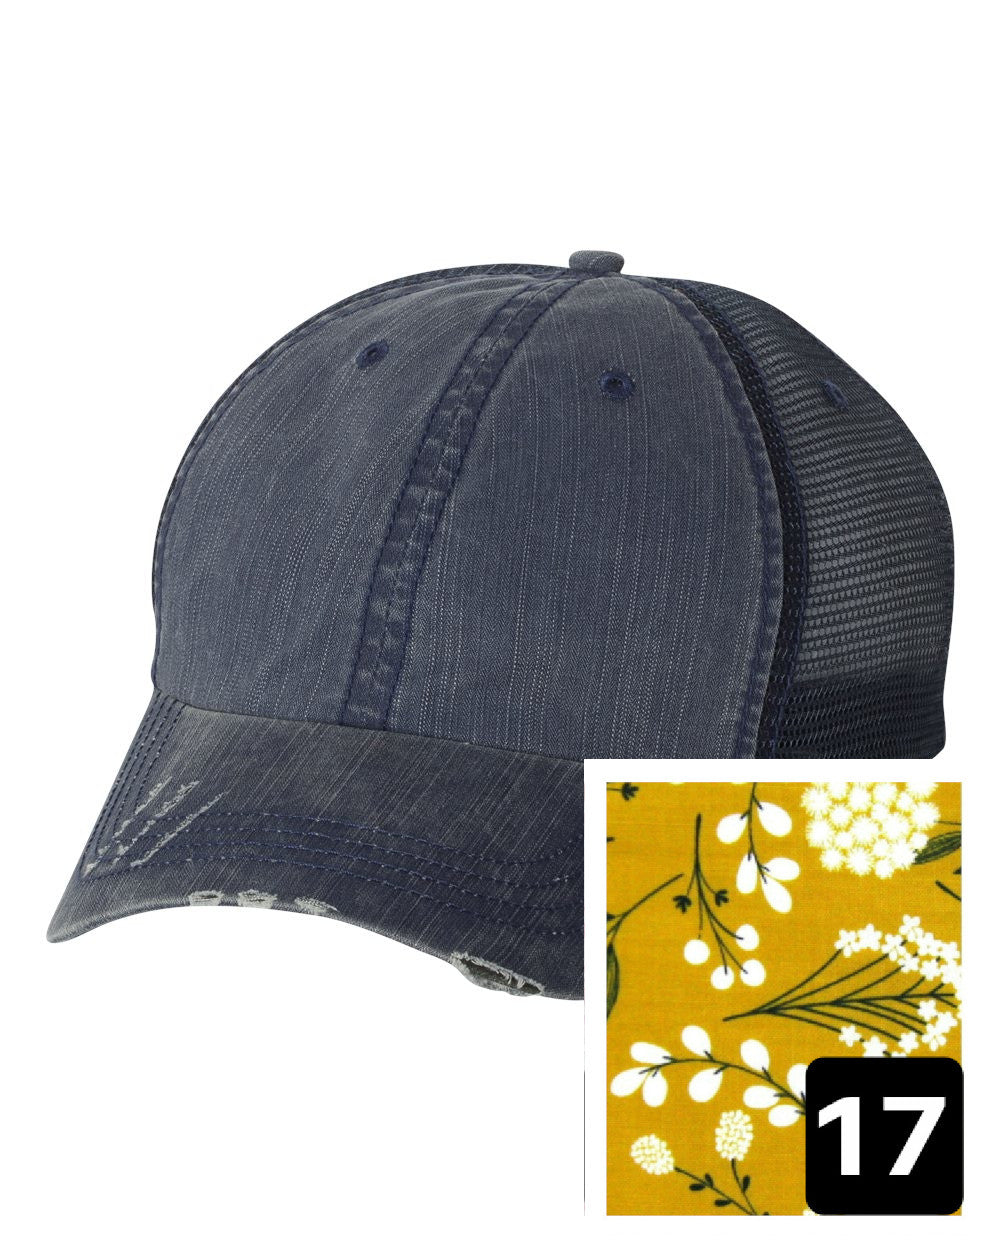 Nebraska Hat | Navy Distressed Trucker Cap | Many Fabric Choices